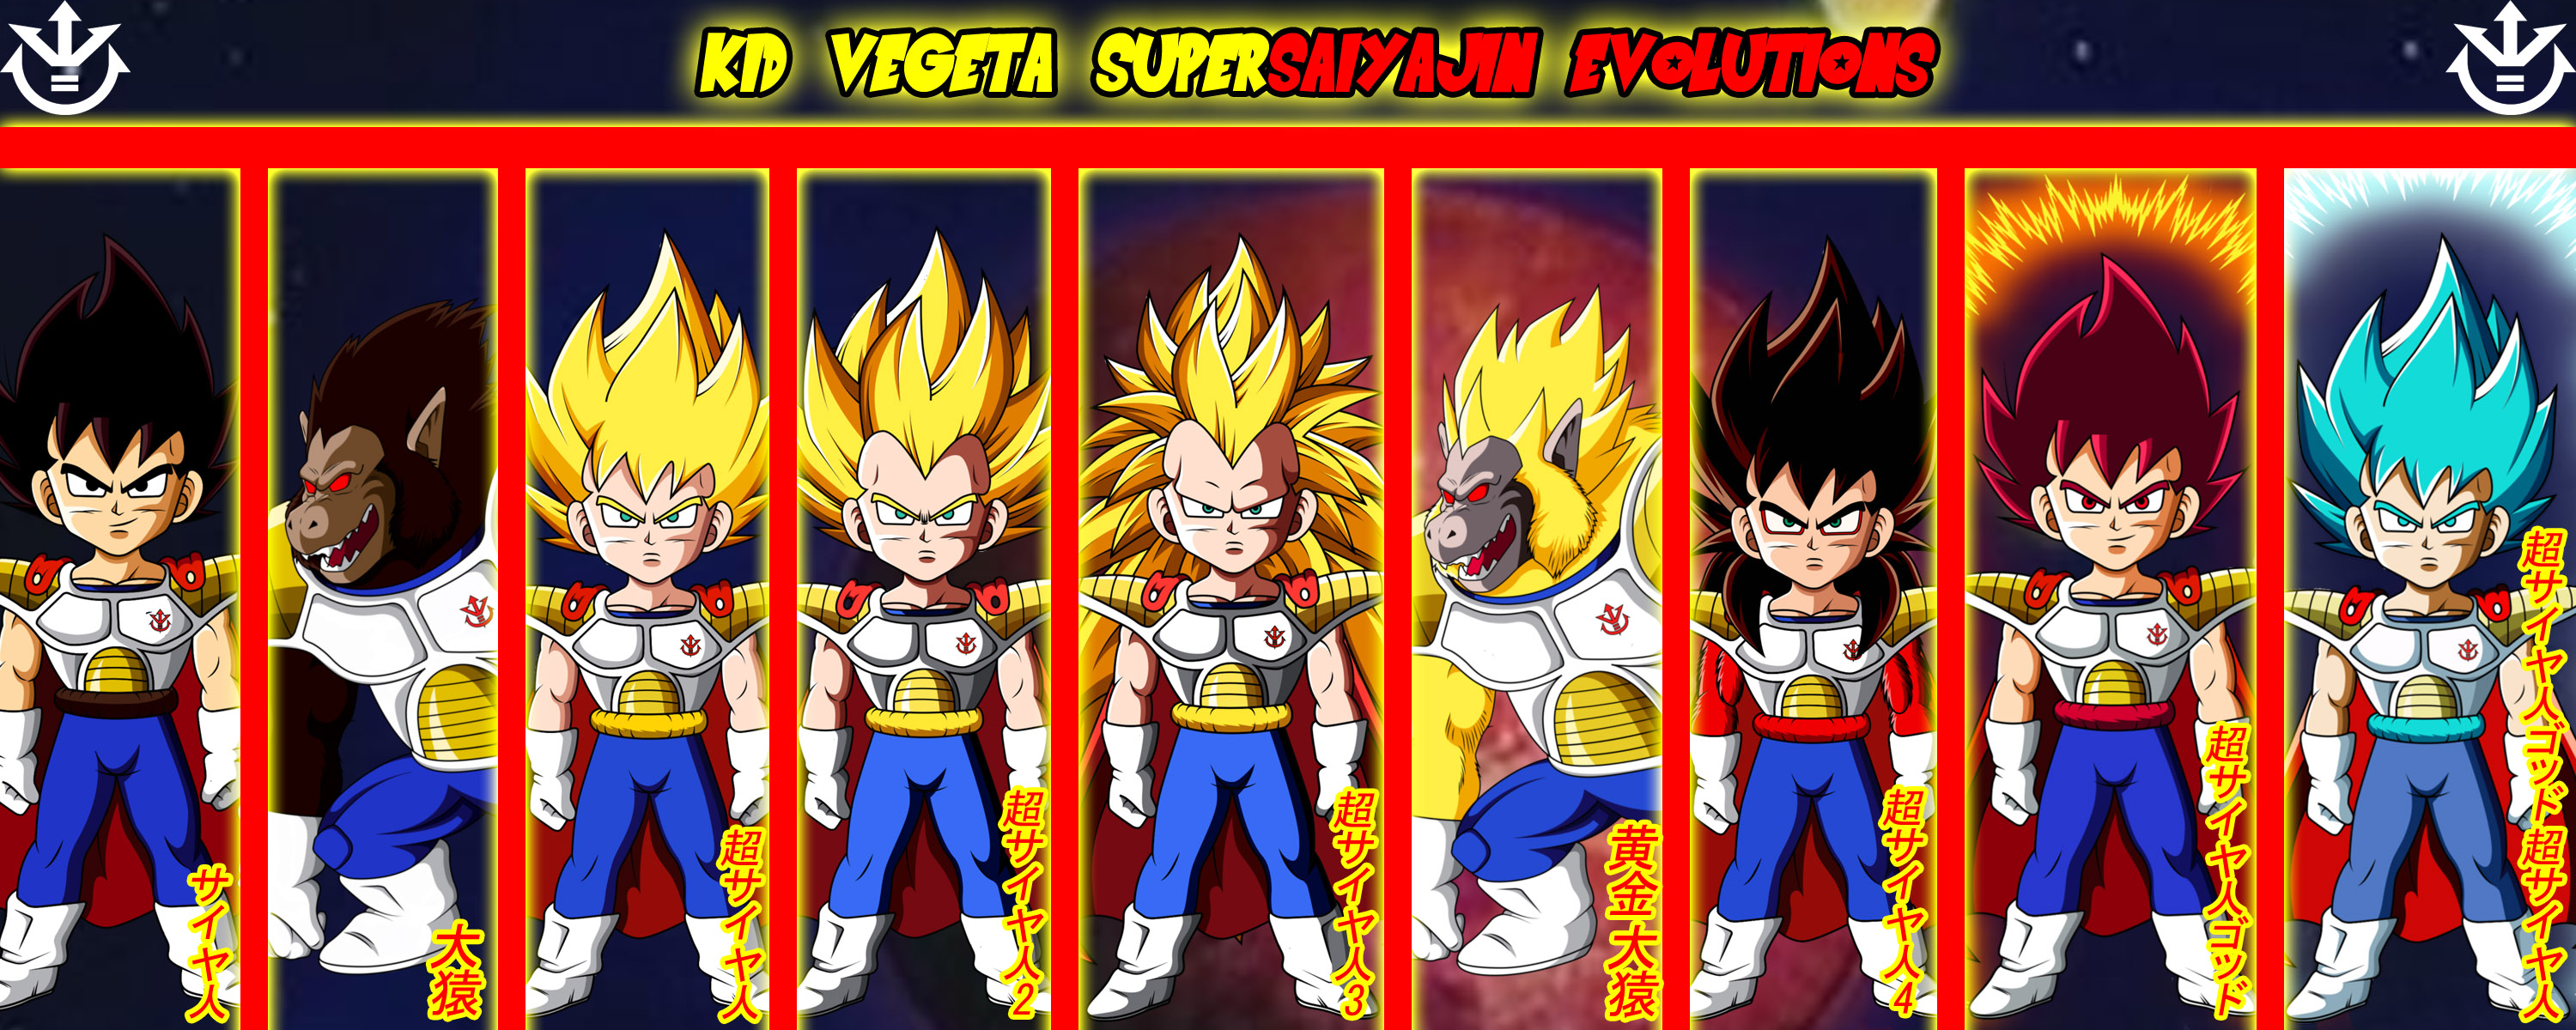 Kid Vegeta Supersaiyajin Evolutions HD Wallpaper